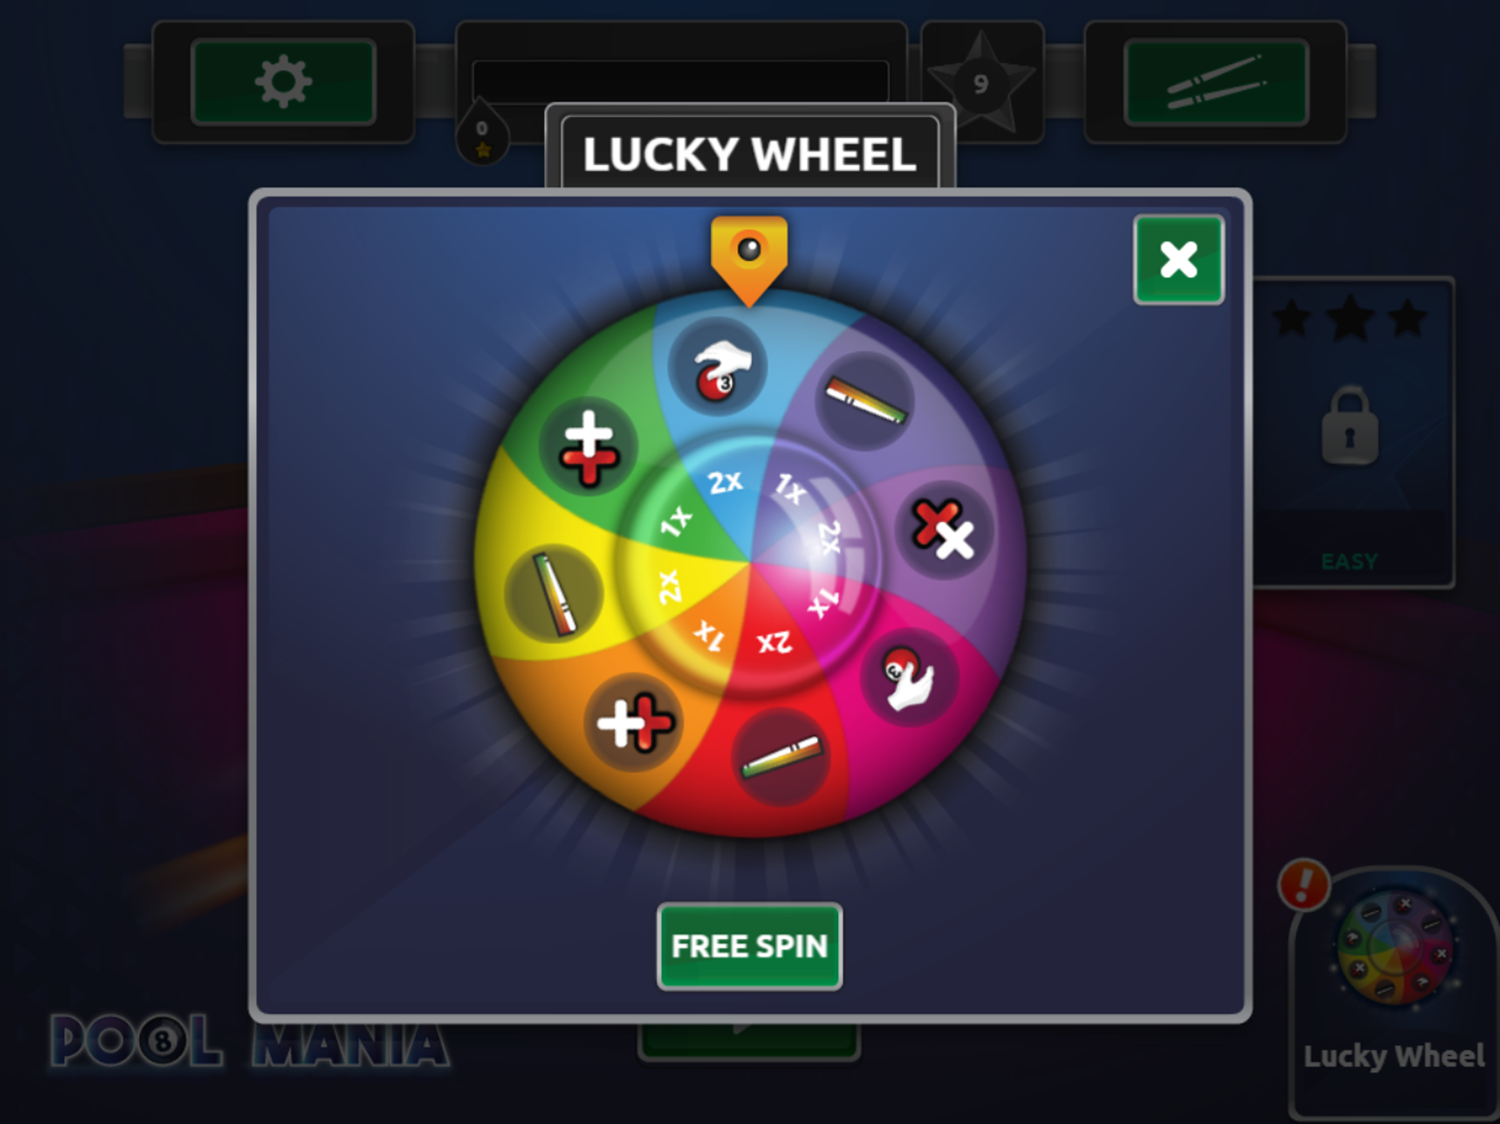 Pool Mania Game Lucky Wheel Screenshot.